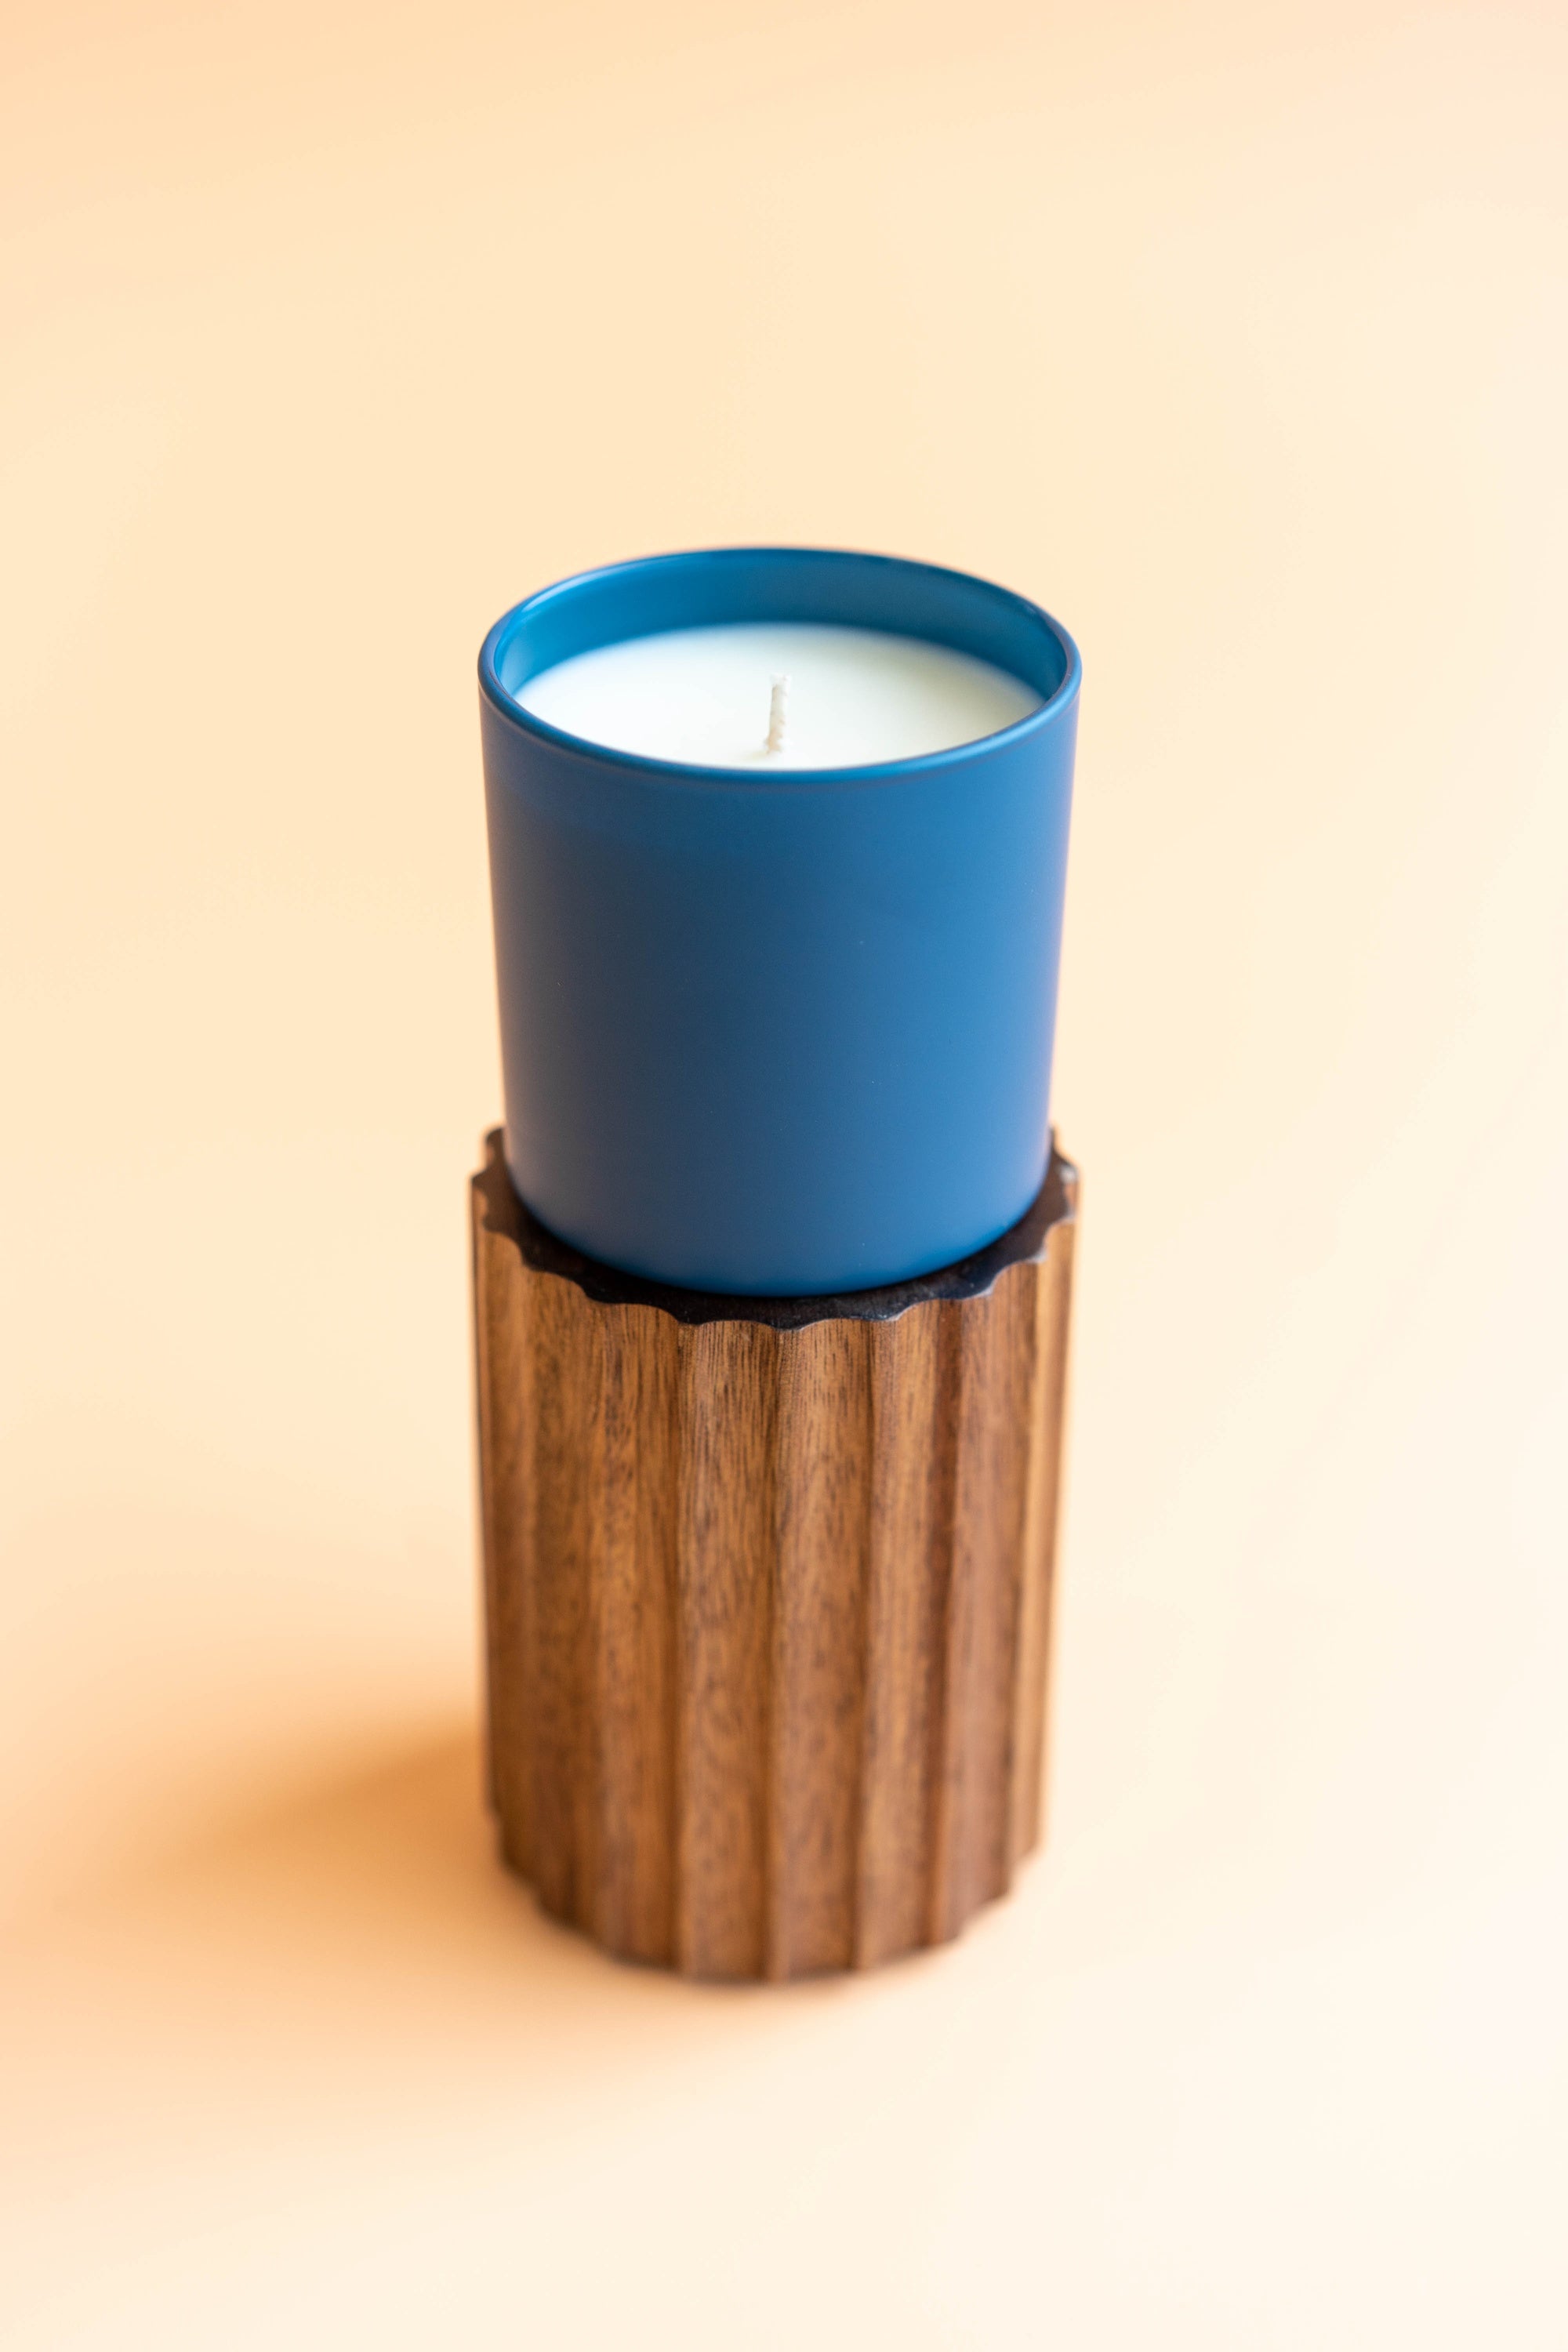 Oakmoss + Amber Dignity Series Glass Jar Soy Candle | Calyan Wax Co. - 5.3 oz